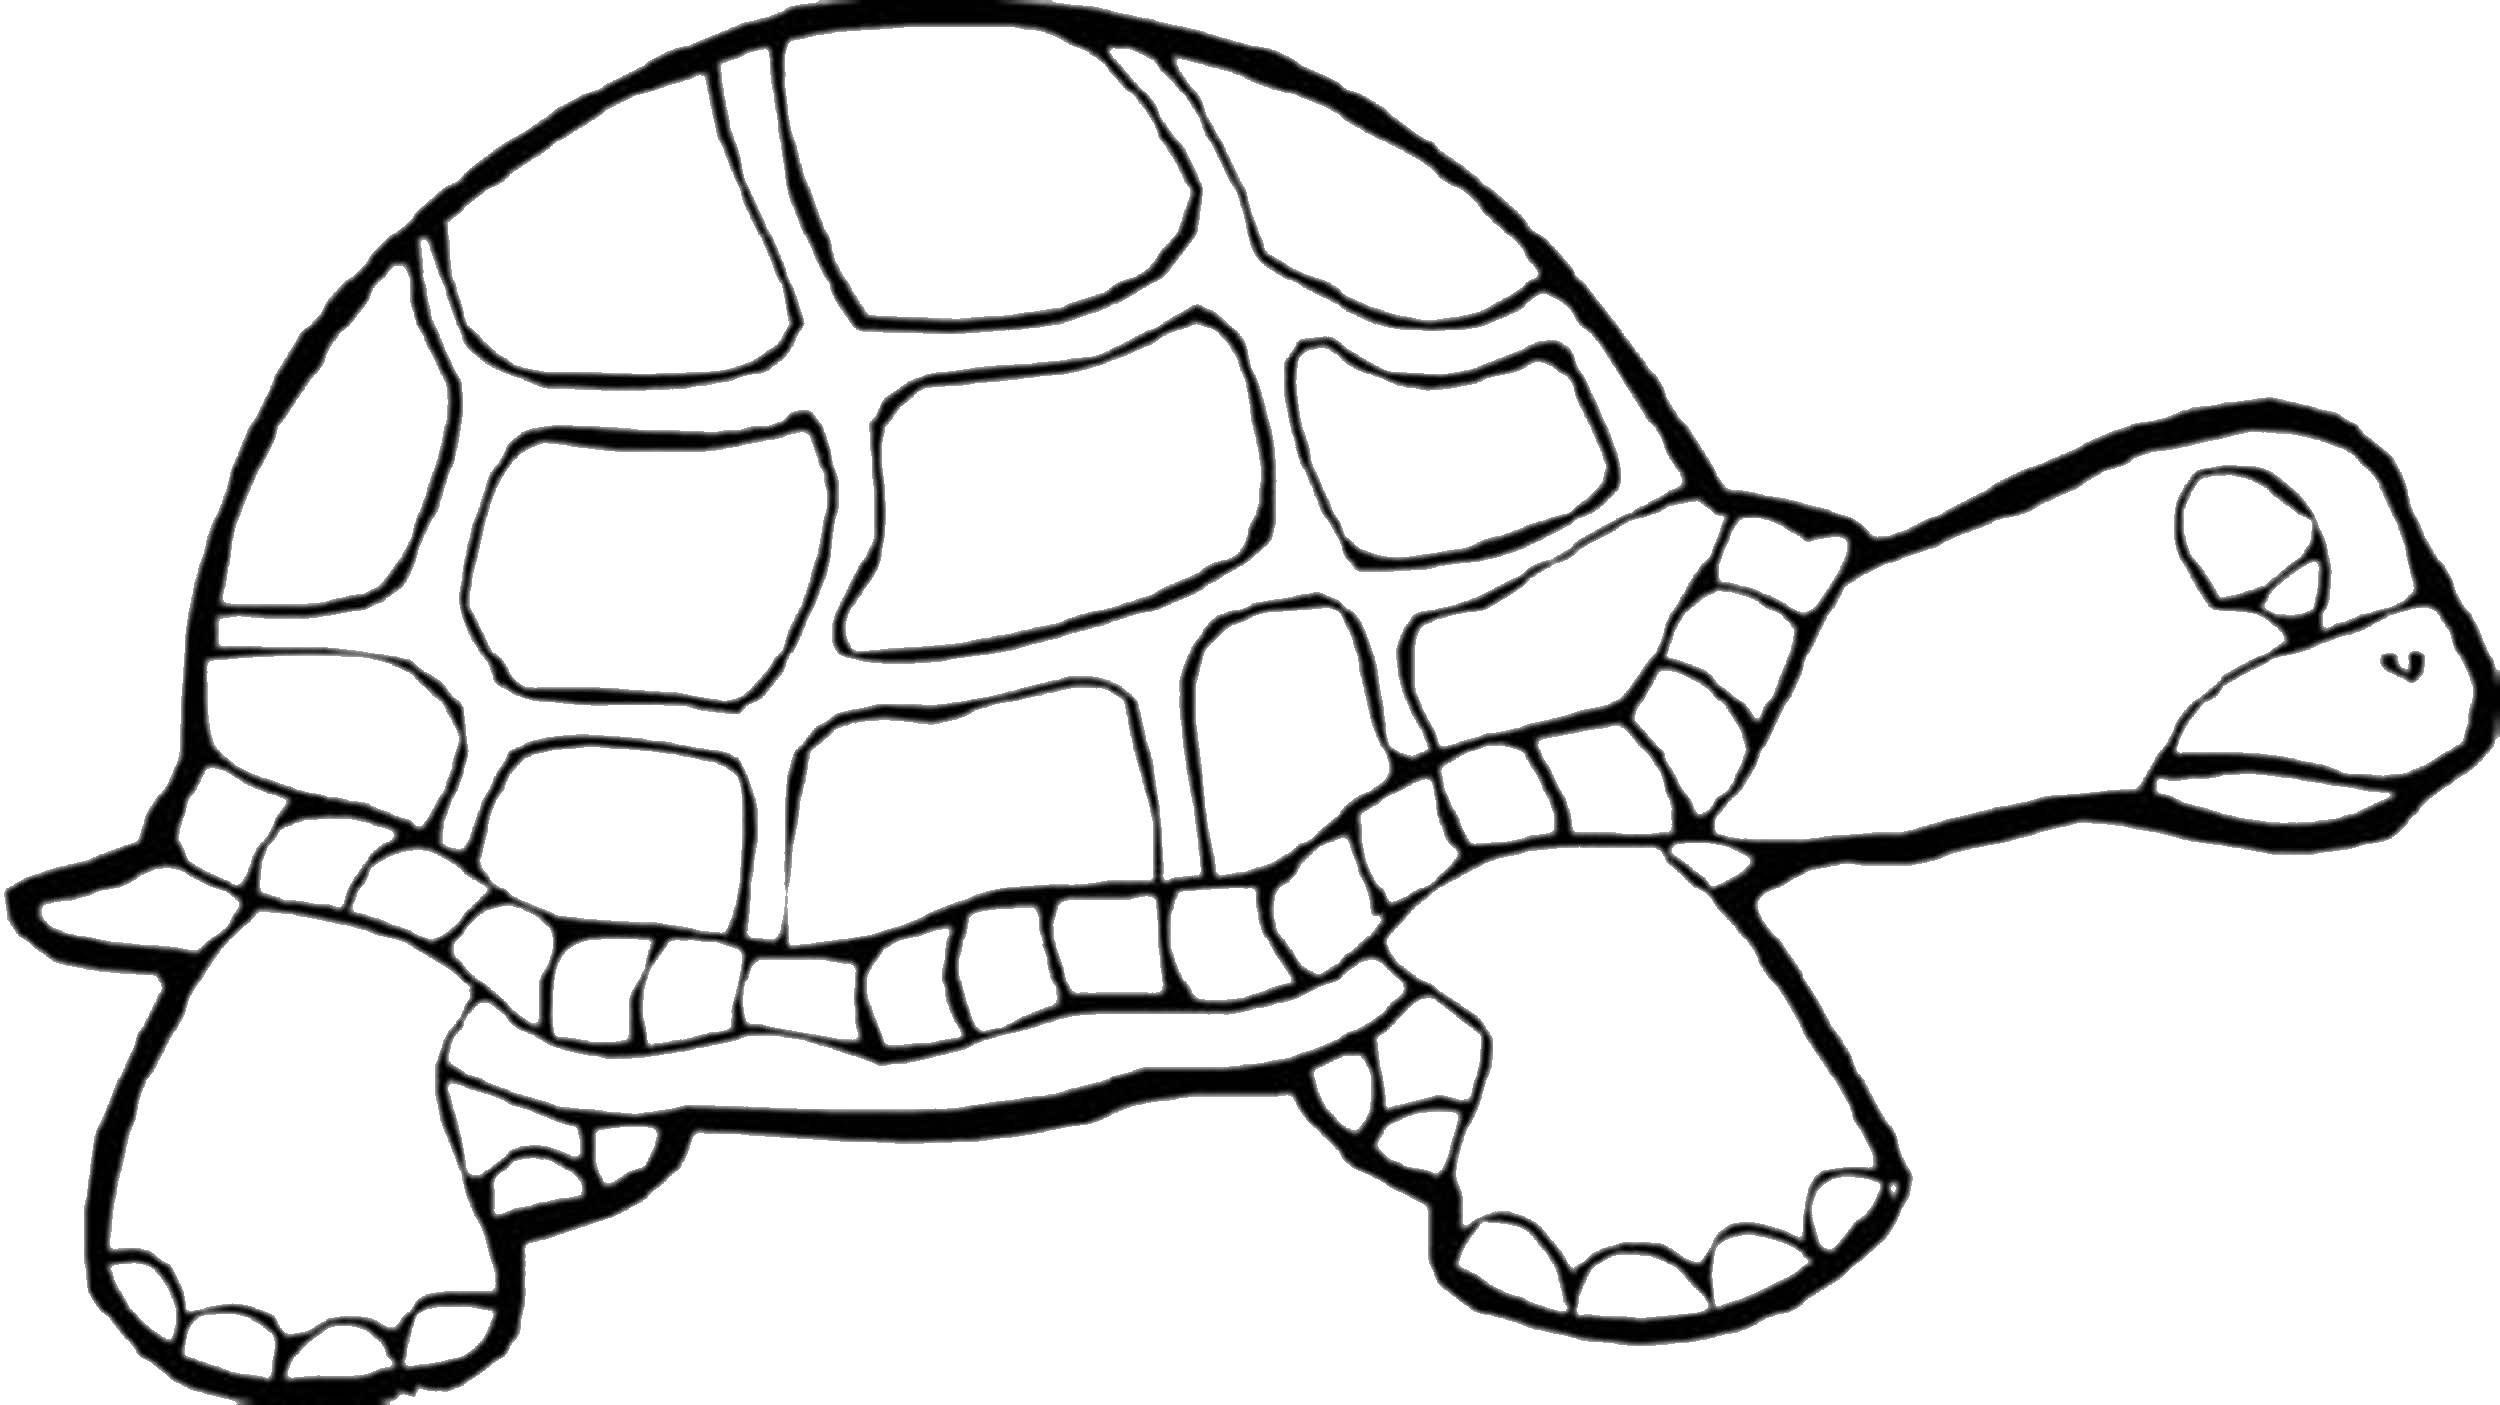 Coloring Sad turtle. Category reptiles. Tags:  Reptile, turtle.